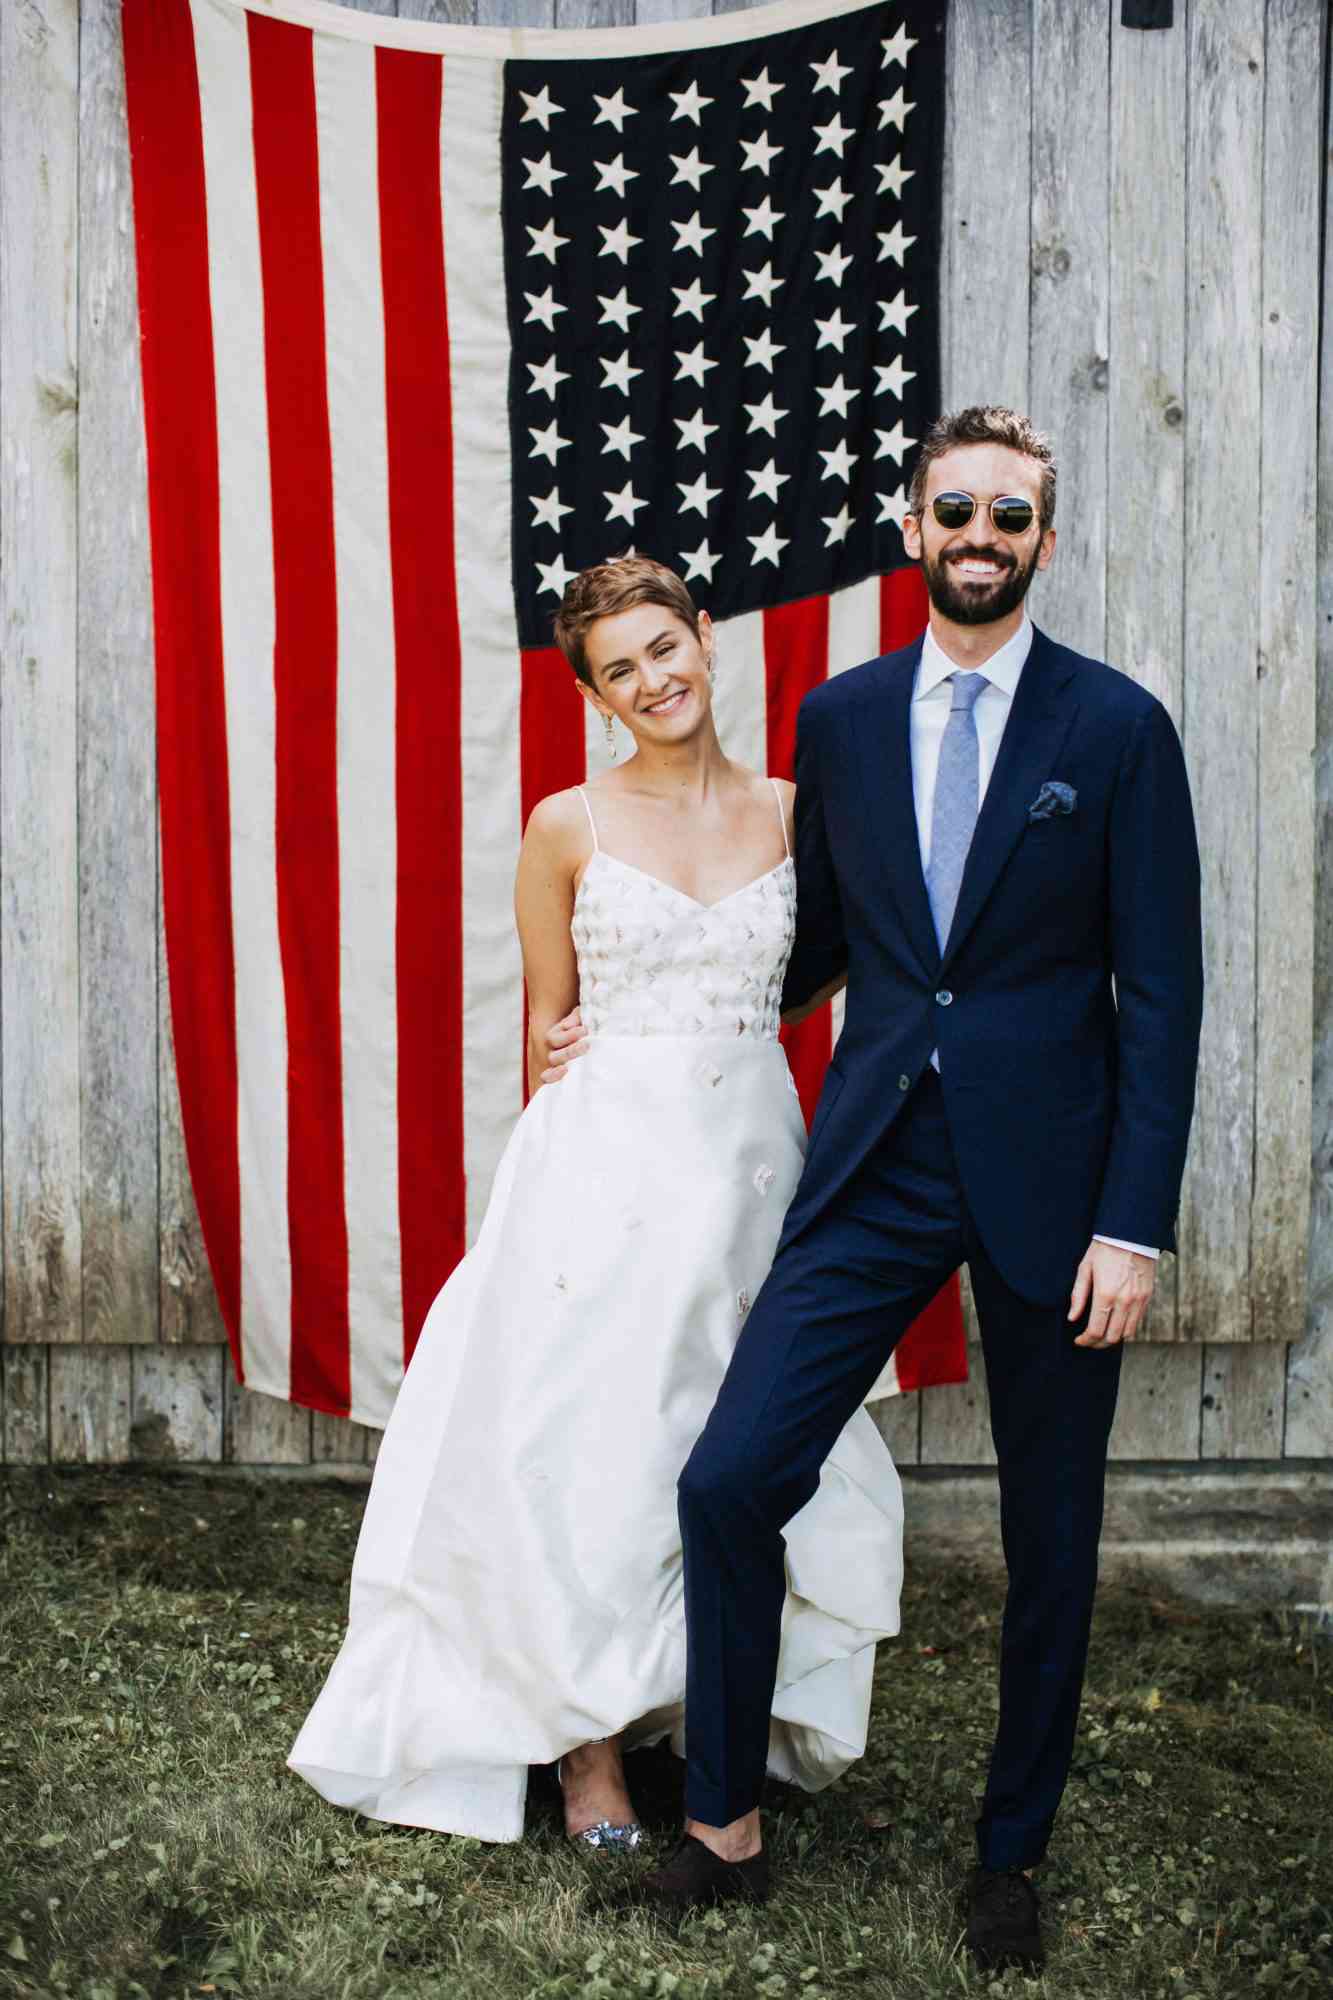 lizzie fortunato wedding photo american flag couple